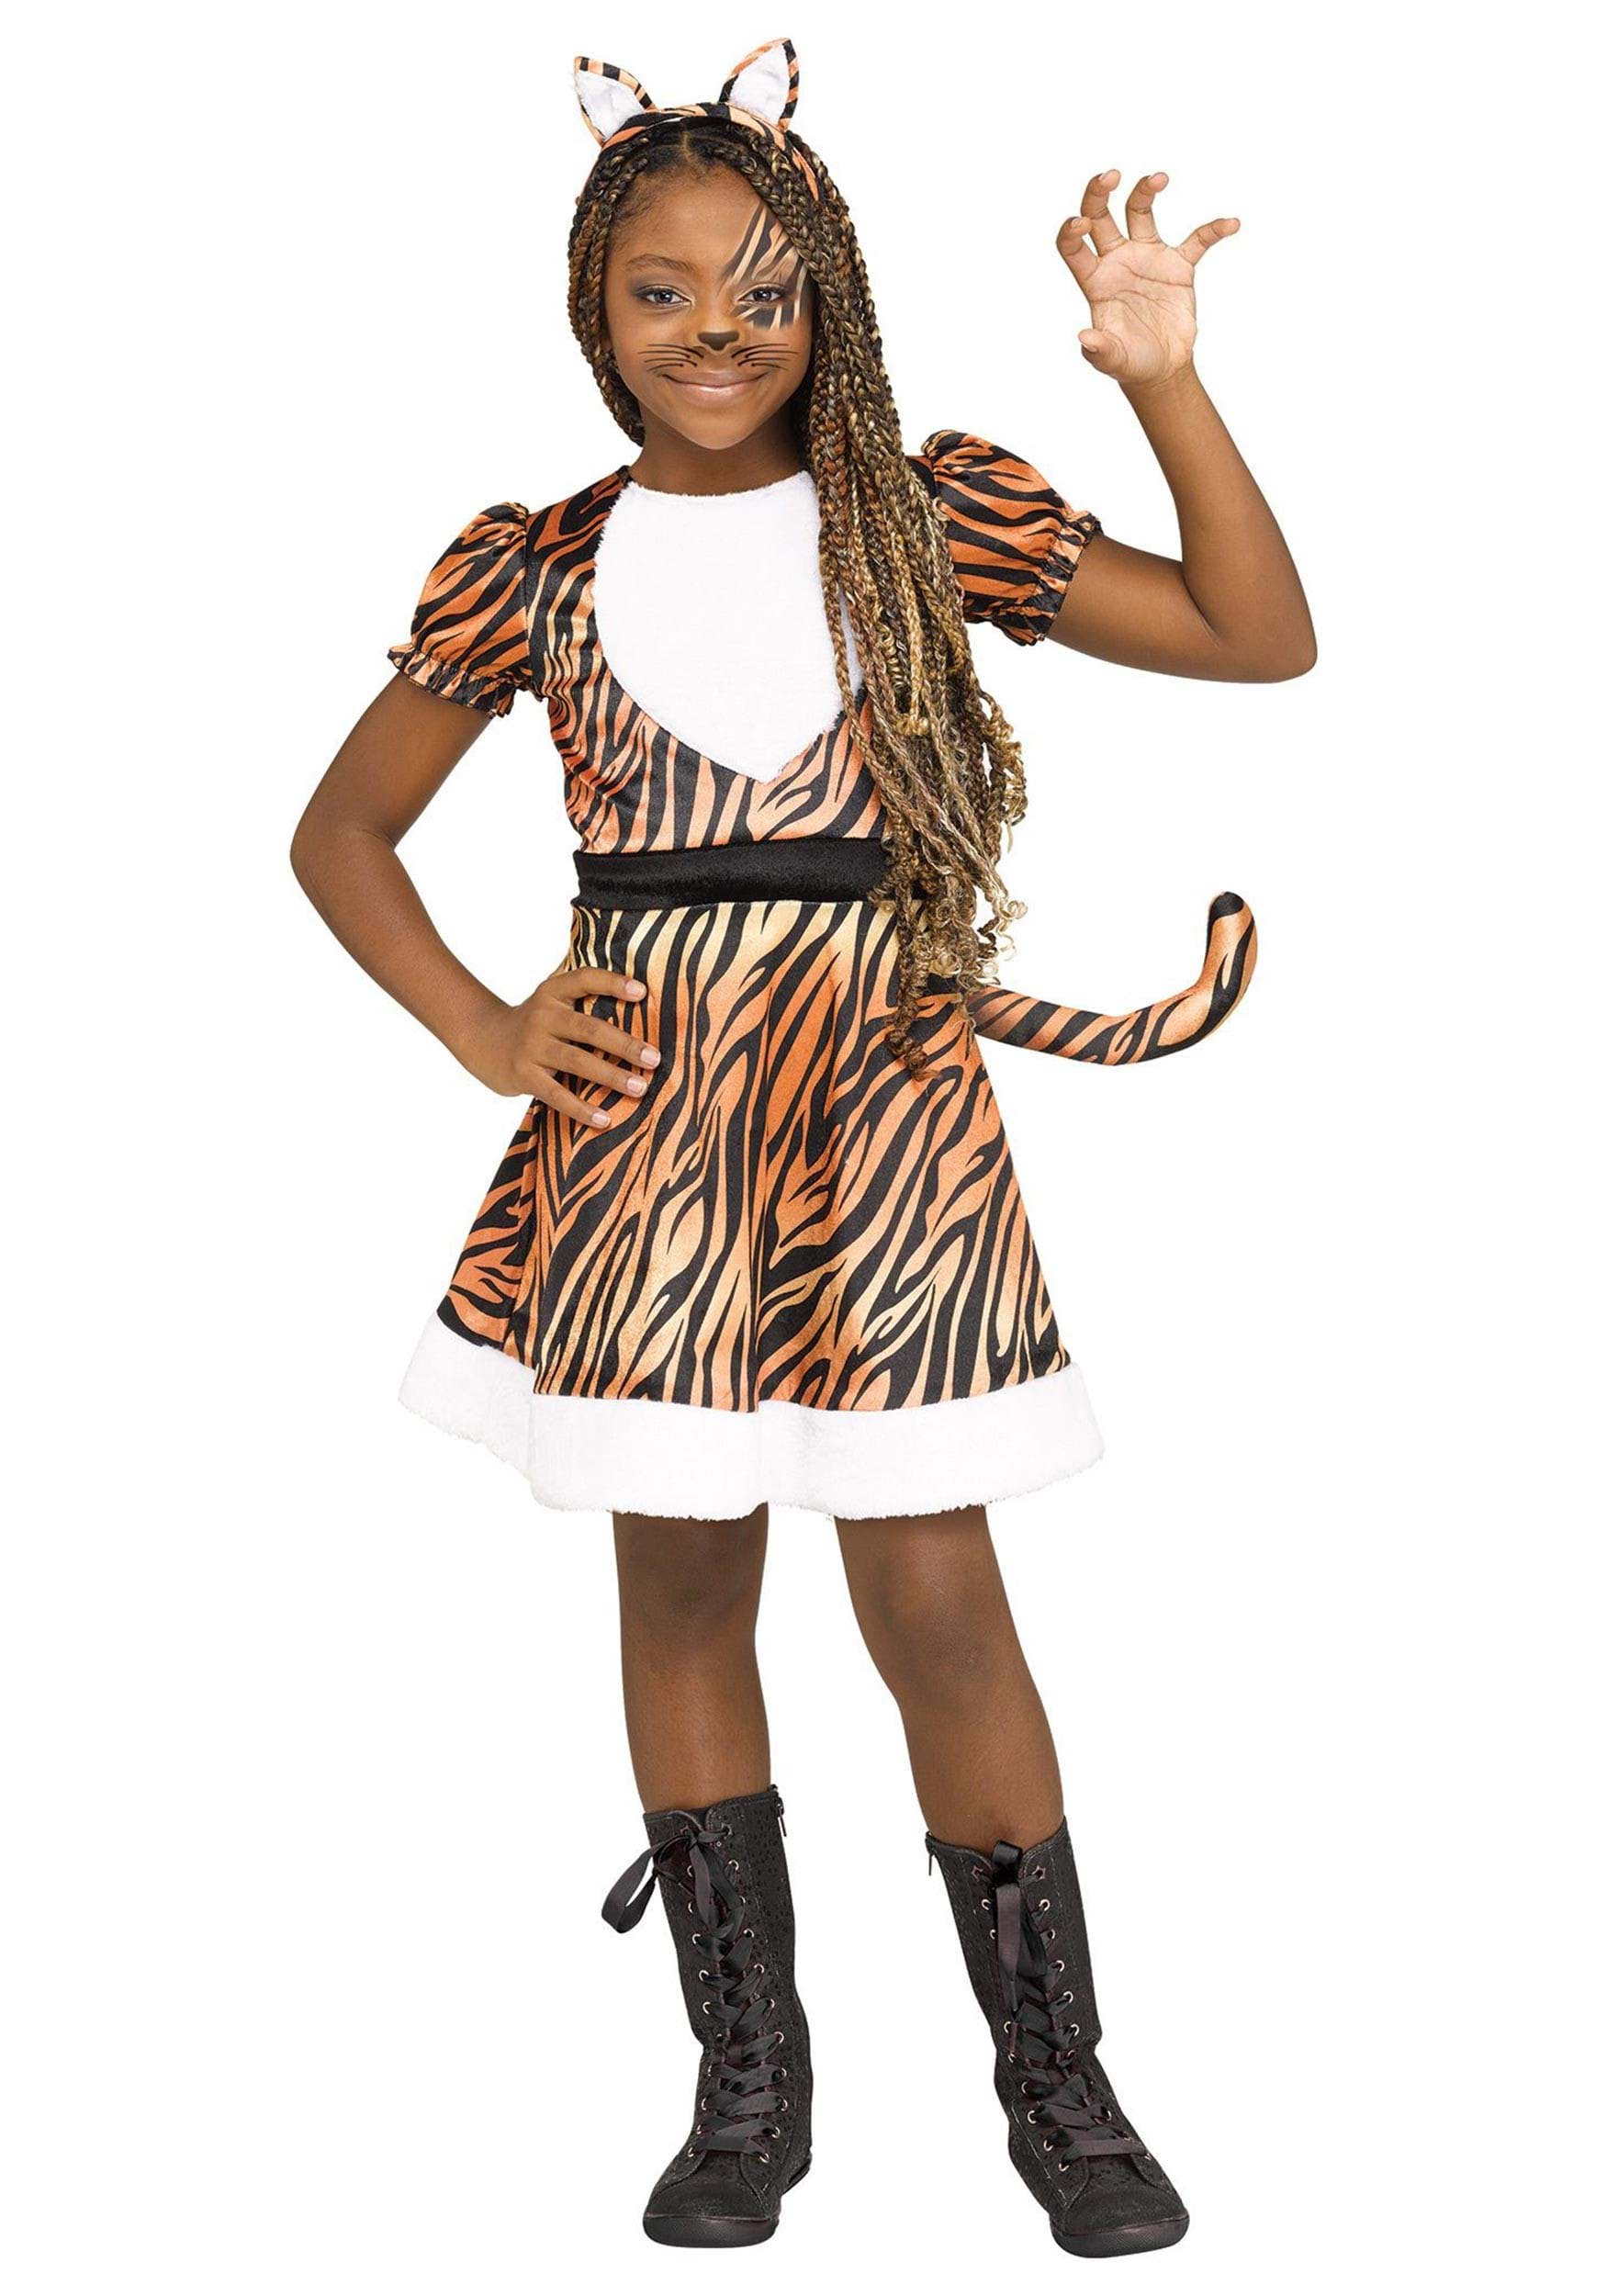 Photos - Fancy Dress Fun World Tigerrr Costume for Girls Black/Orange/White FU116642